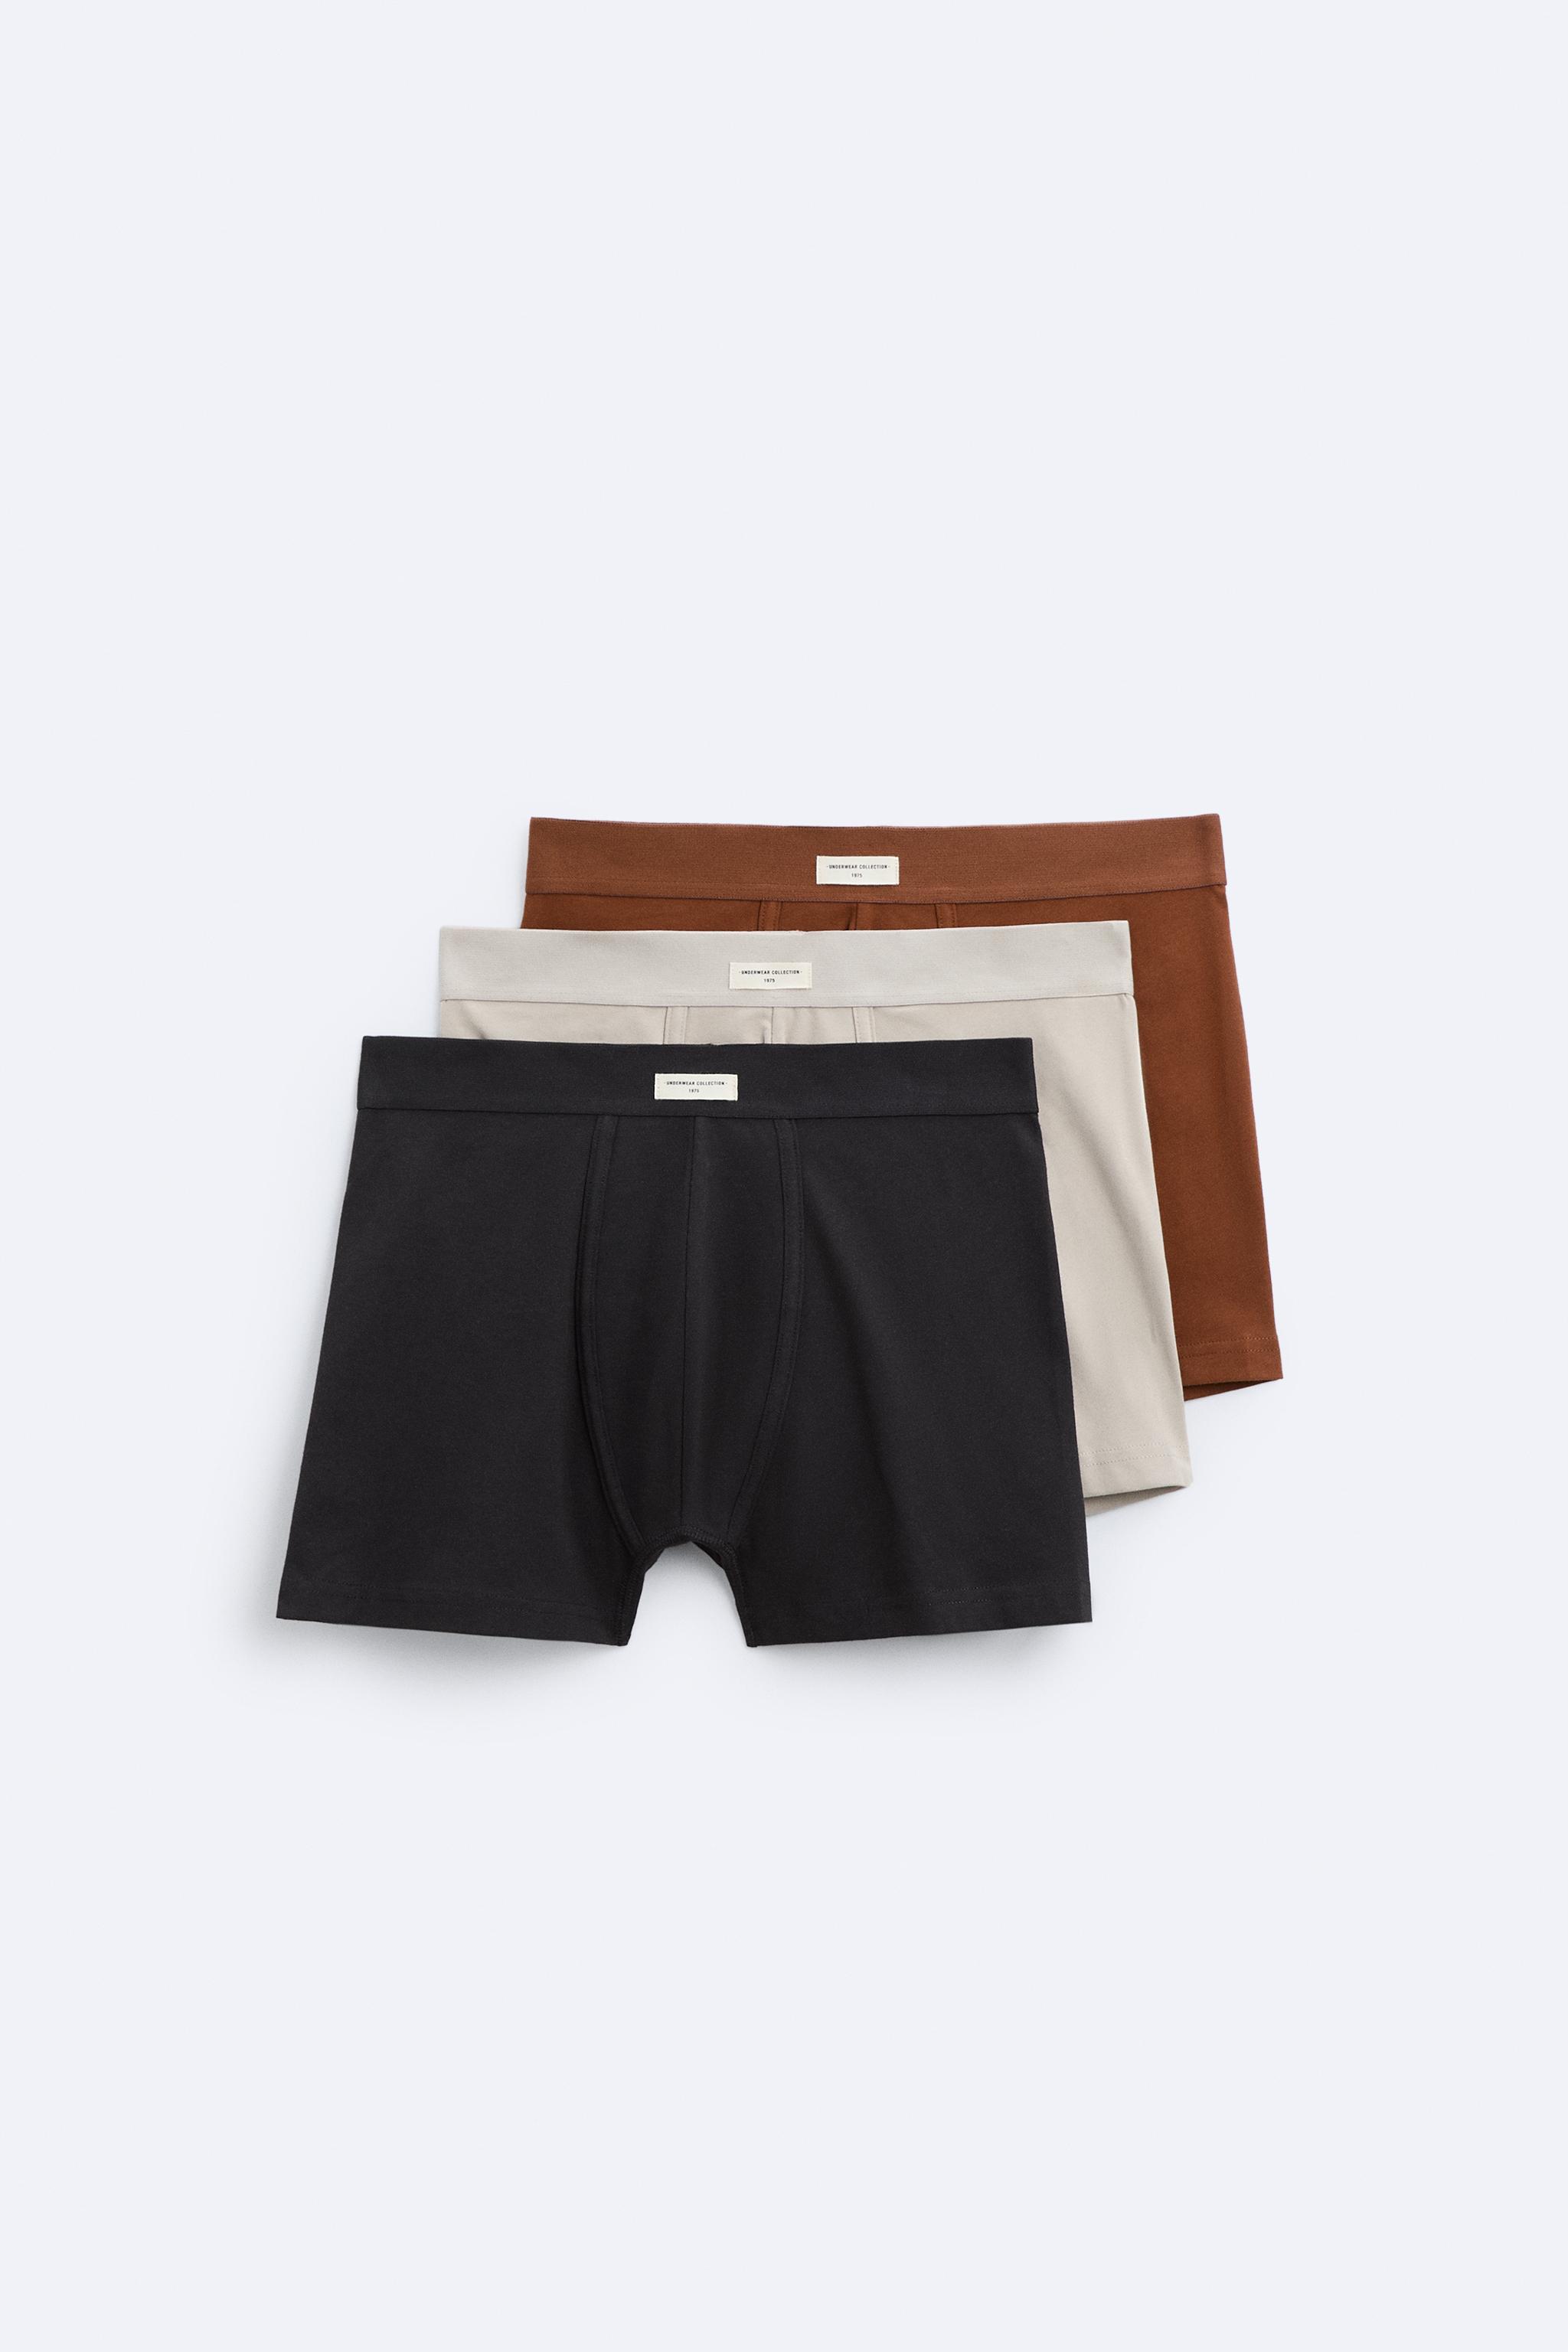 NWT Jockey Life Coll. Men's 3 Pack - Boxer Brief - Underwear Solid